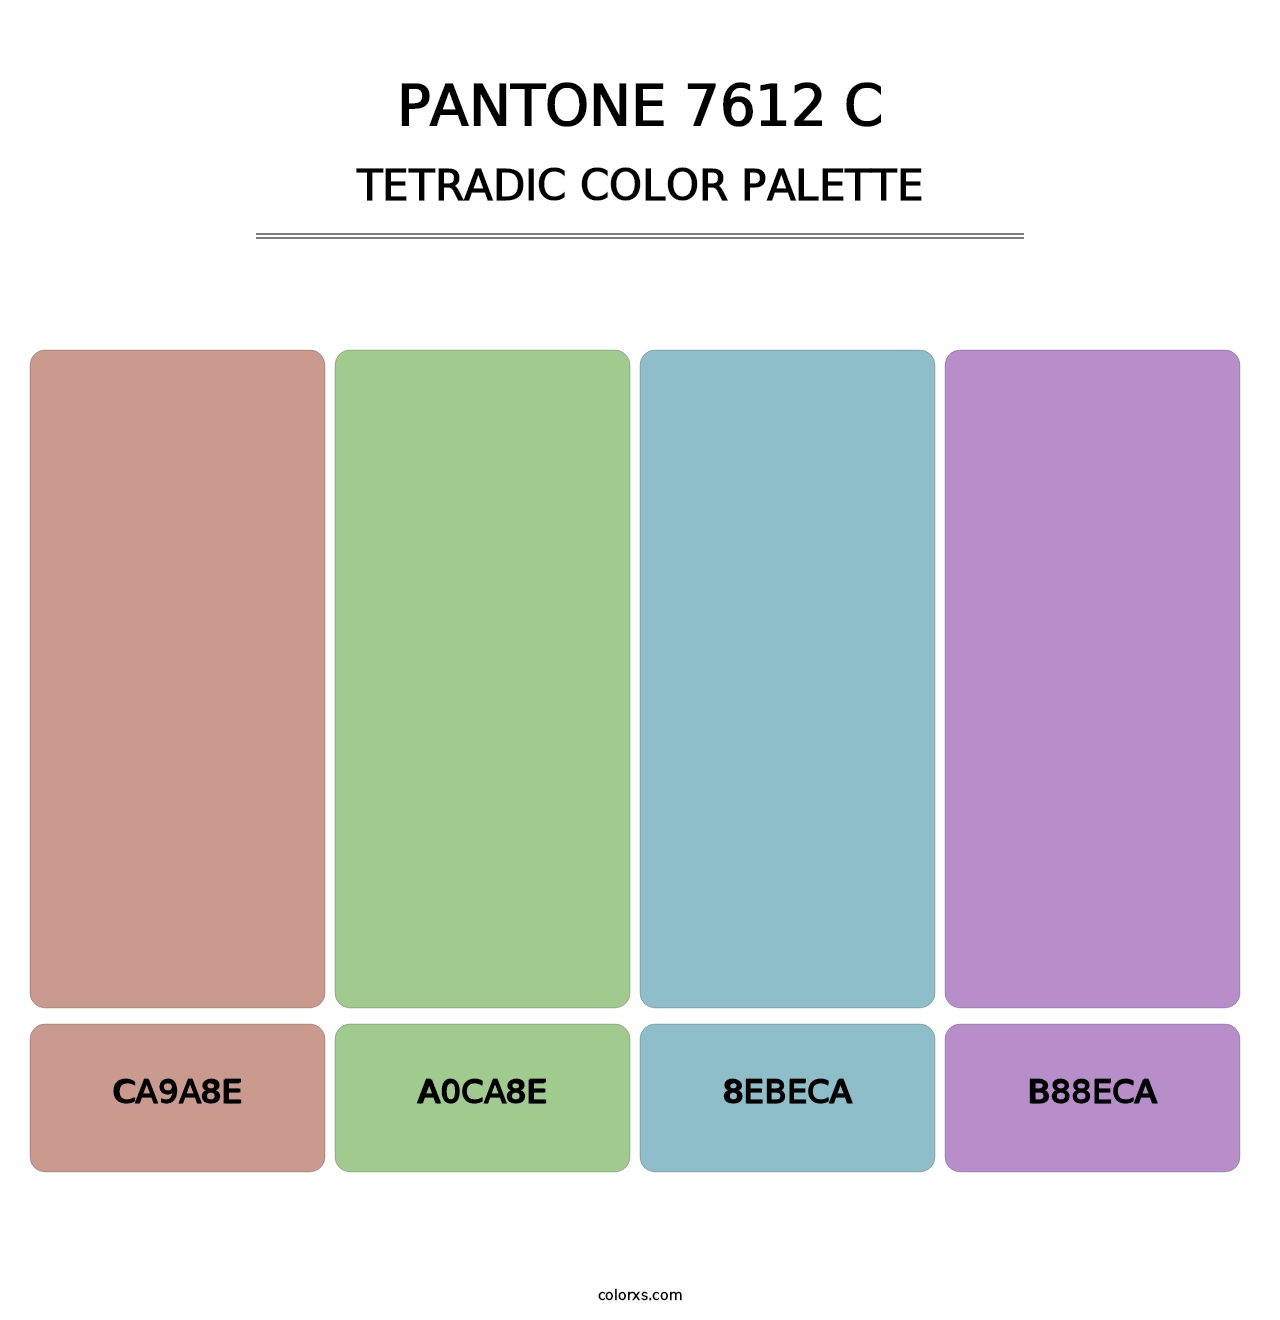 PANTONE 7612 C - Tetradic Color Palette